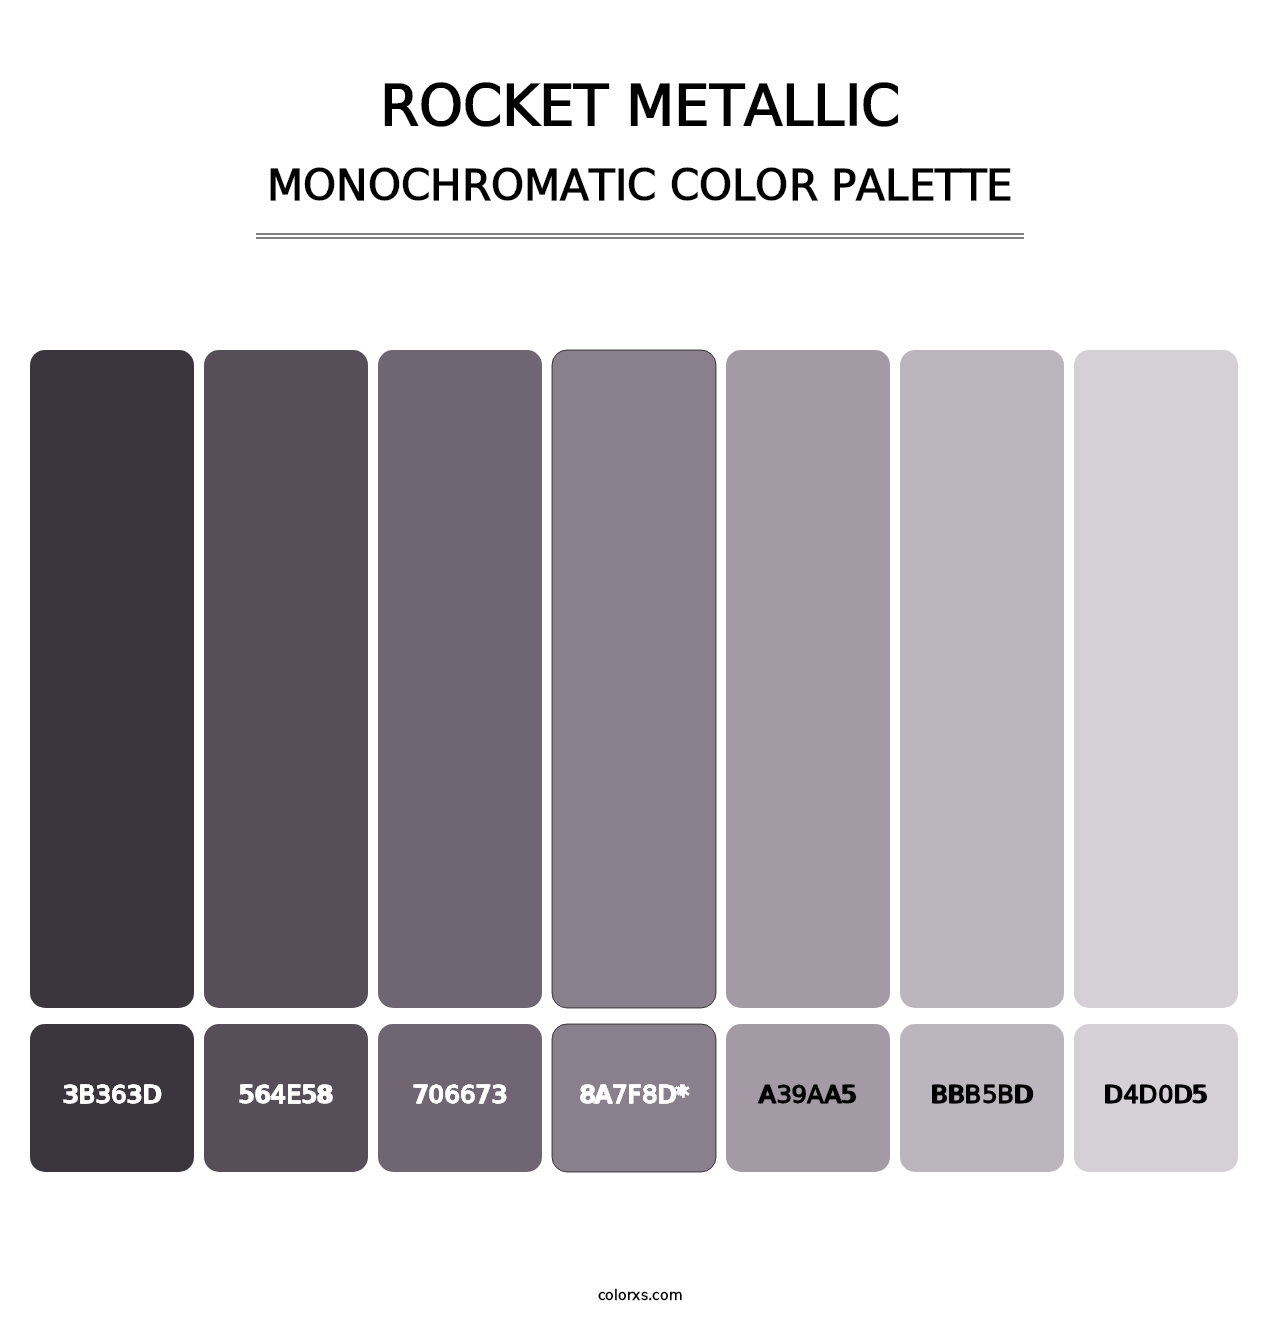 Rocket Metallic - Monochromatic Color Palette